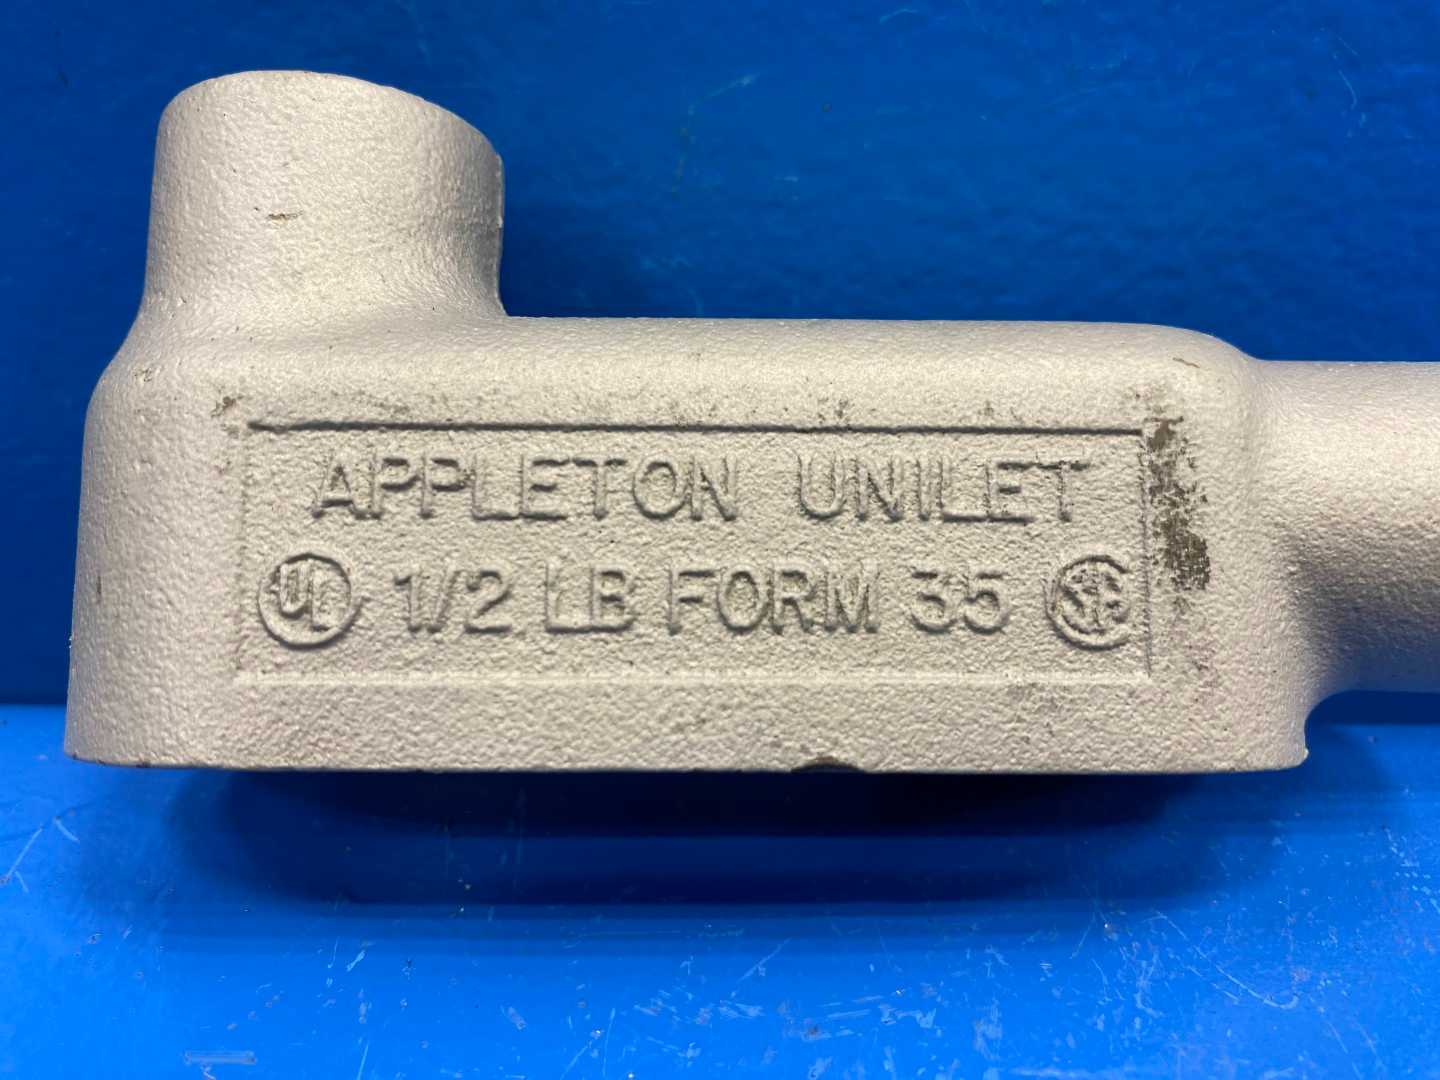 Appleton Unilet 1/2" LB Form 35 (No Cover)